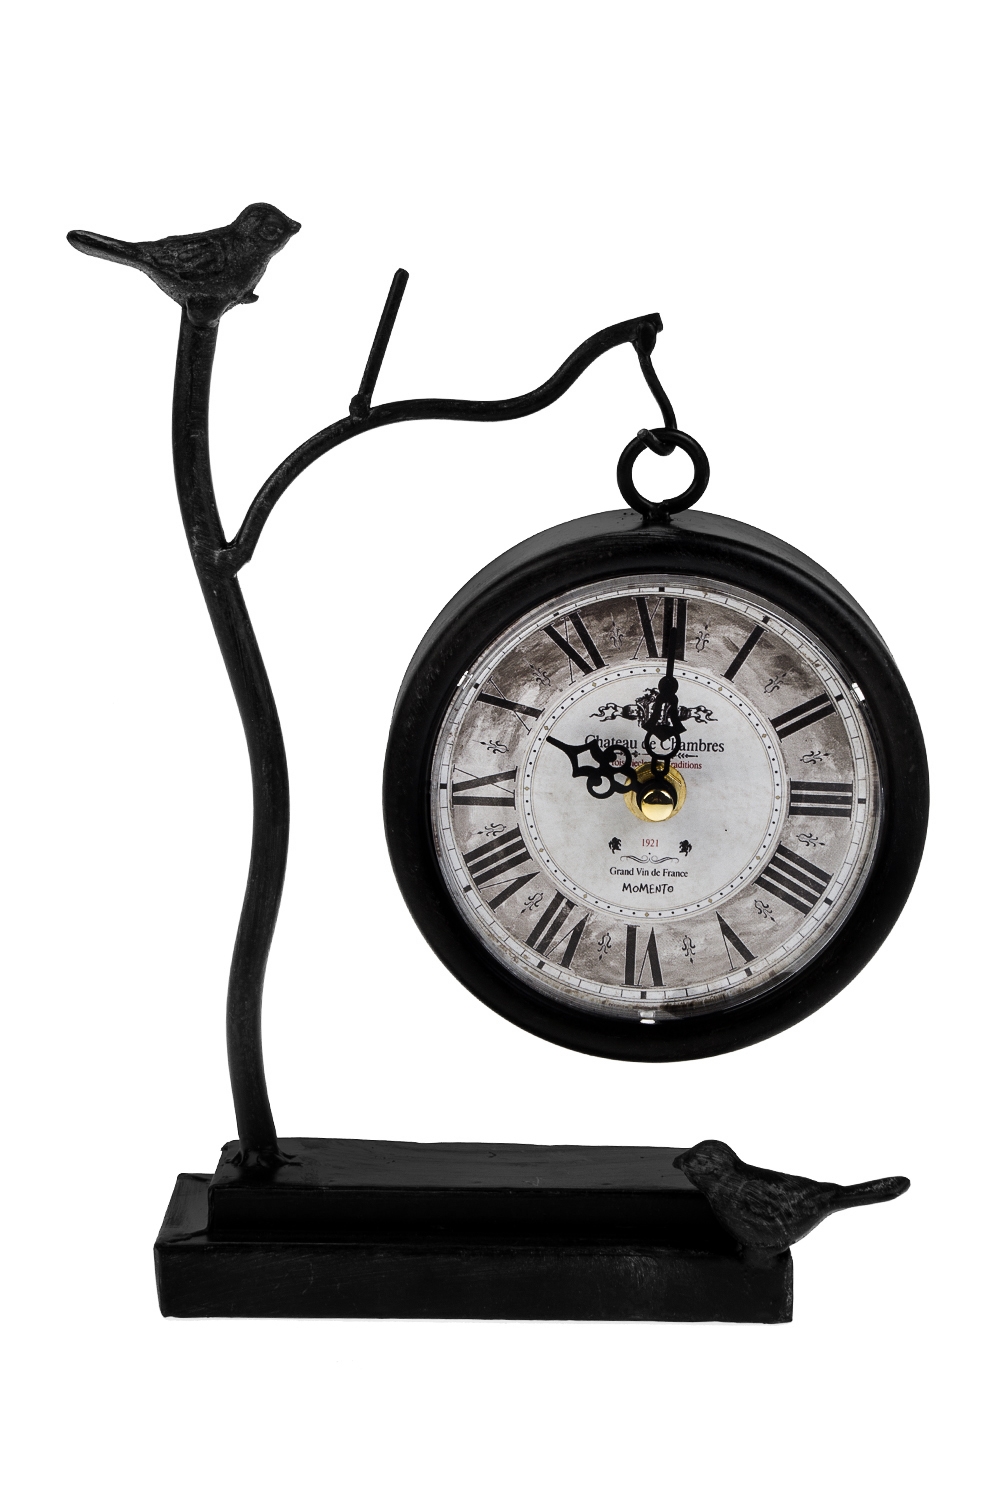 Часы пение птиц. Необычные настольные часы. Часы настольные необычные оригинальные. Часы настольные обычные. Часы необычные настольные настольные.